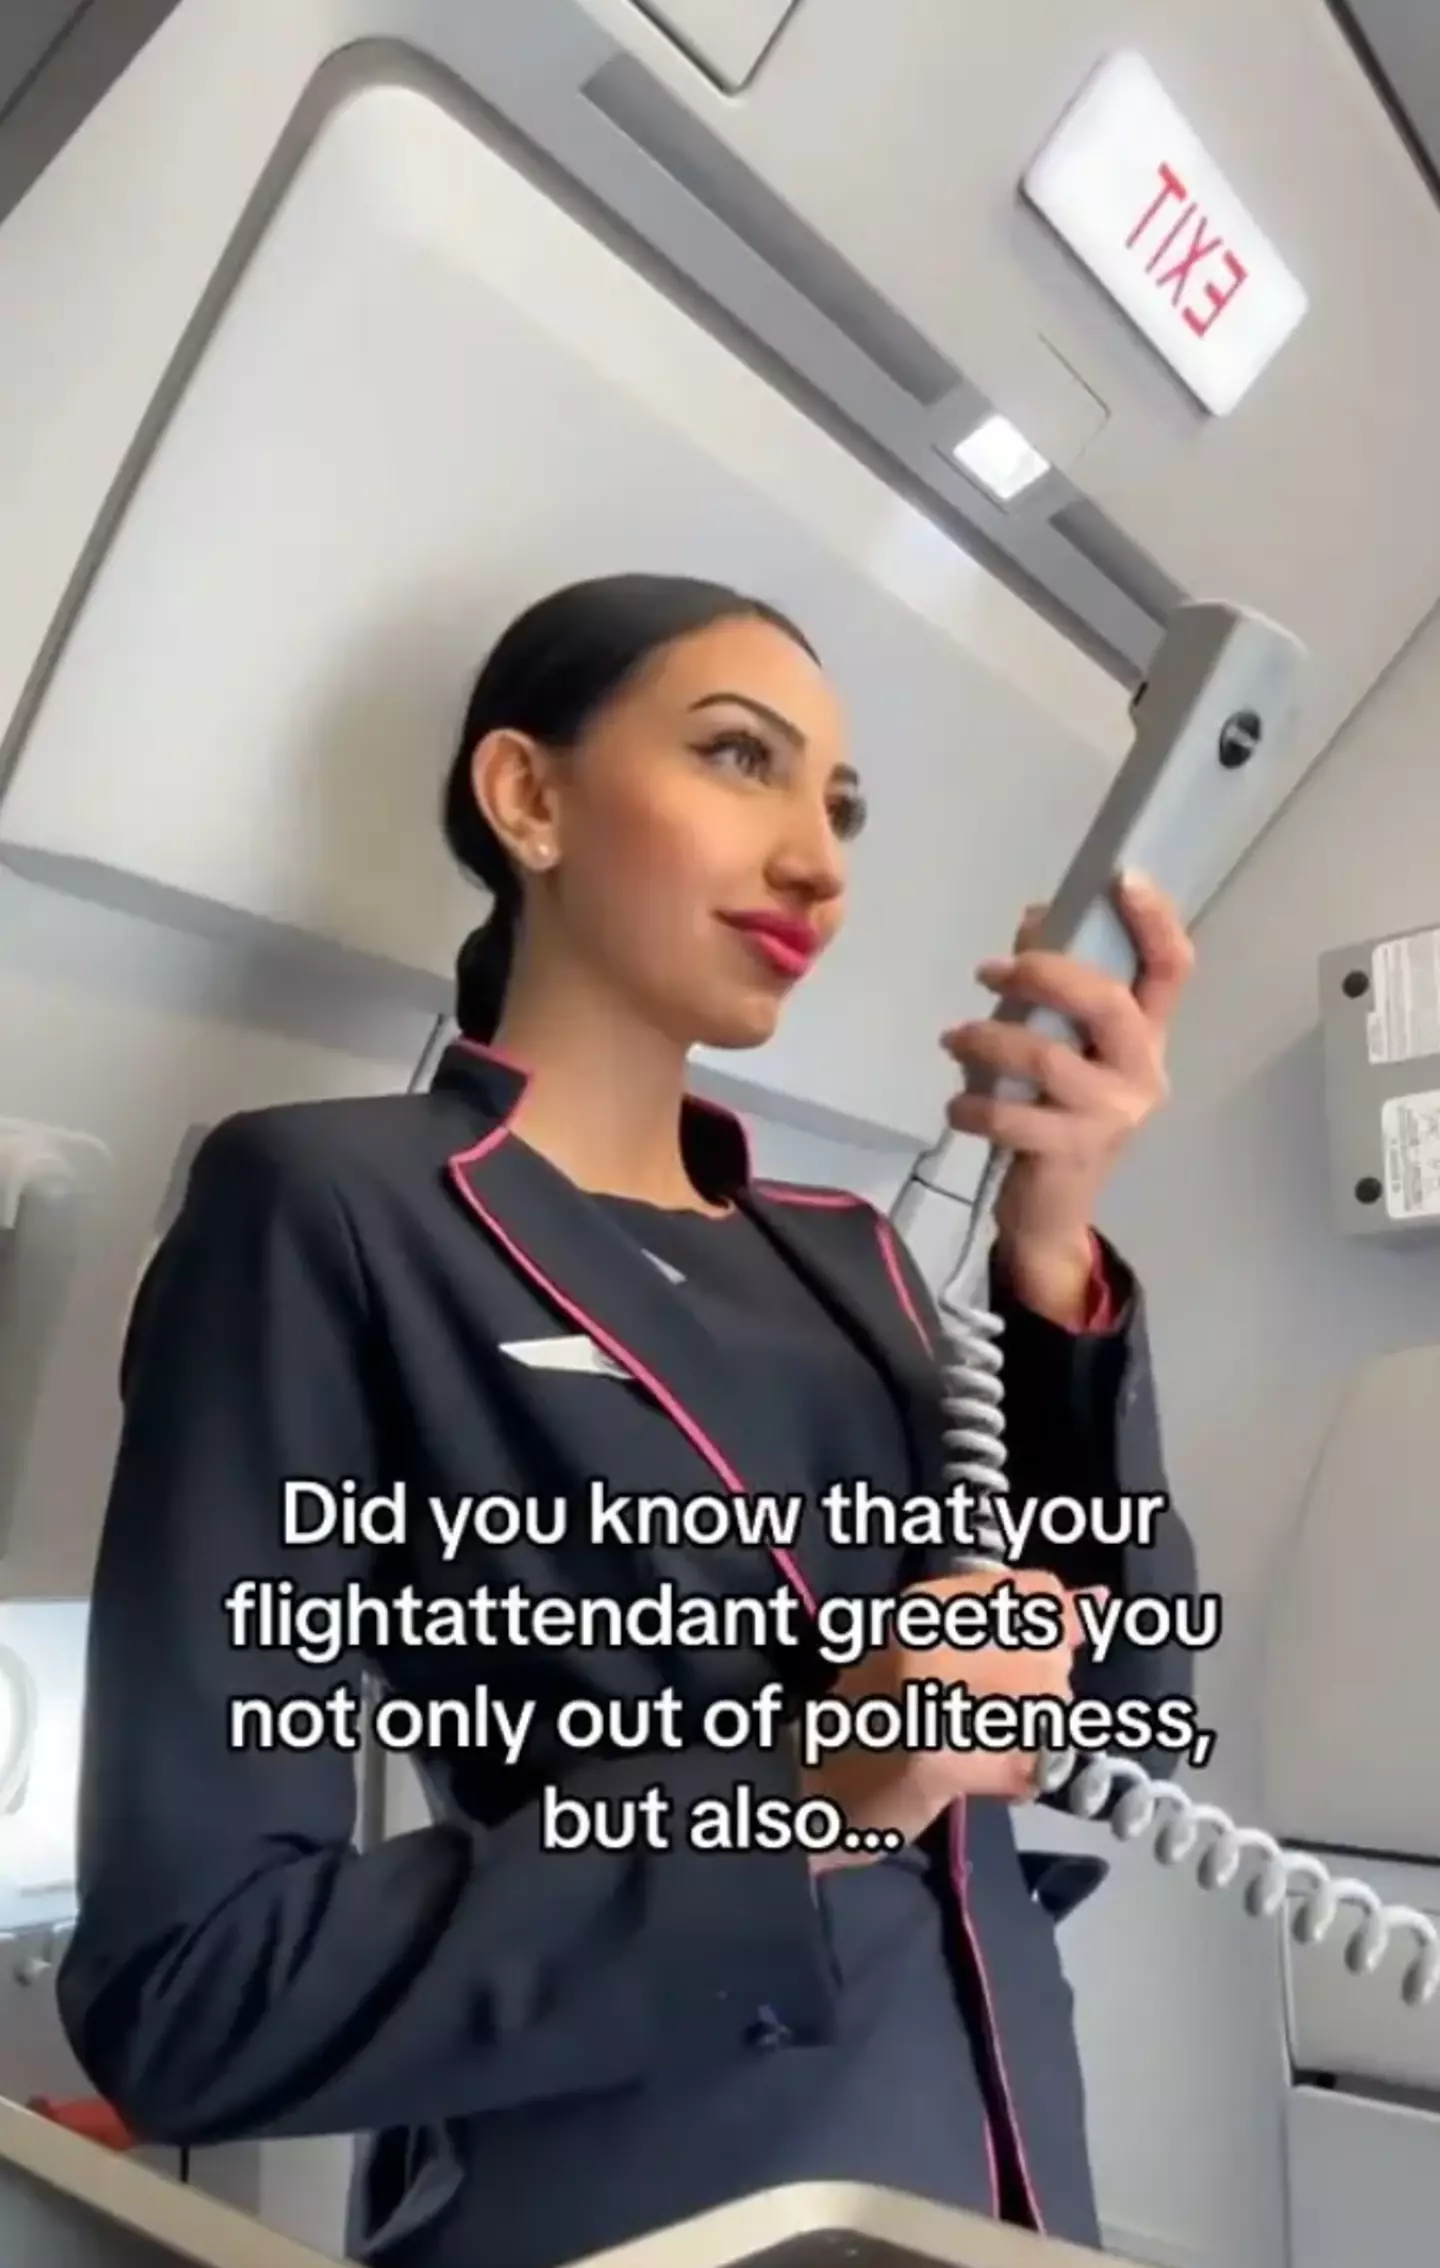 The flight attendant has explained why they greet passengers. (TikTok@itsmekikooooo)